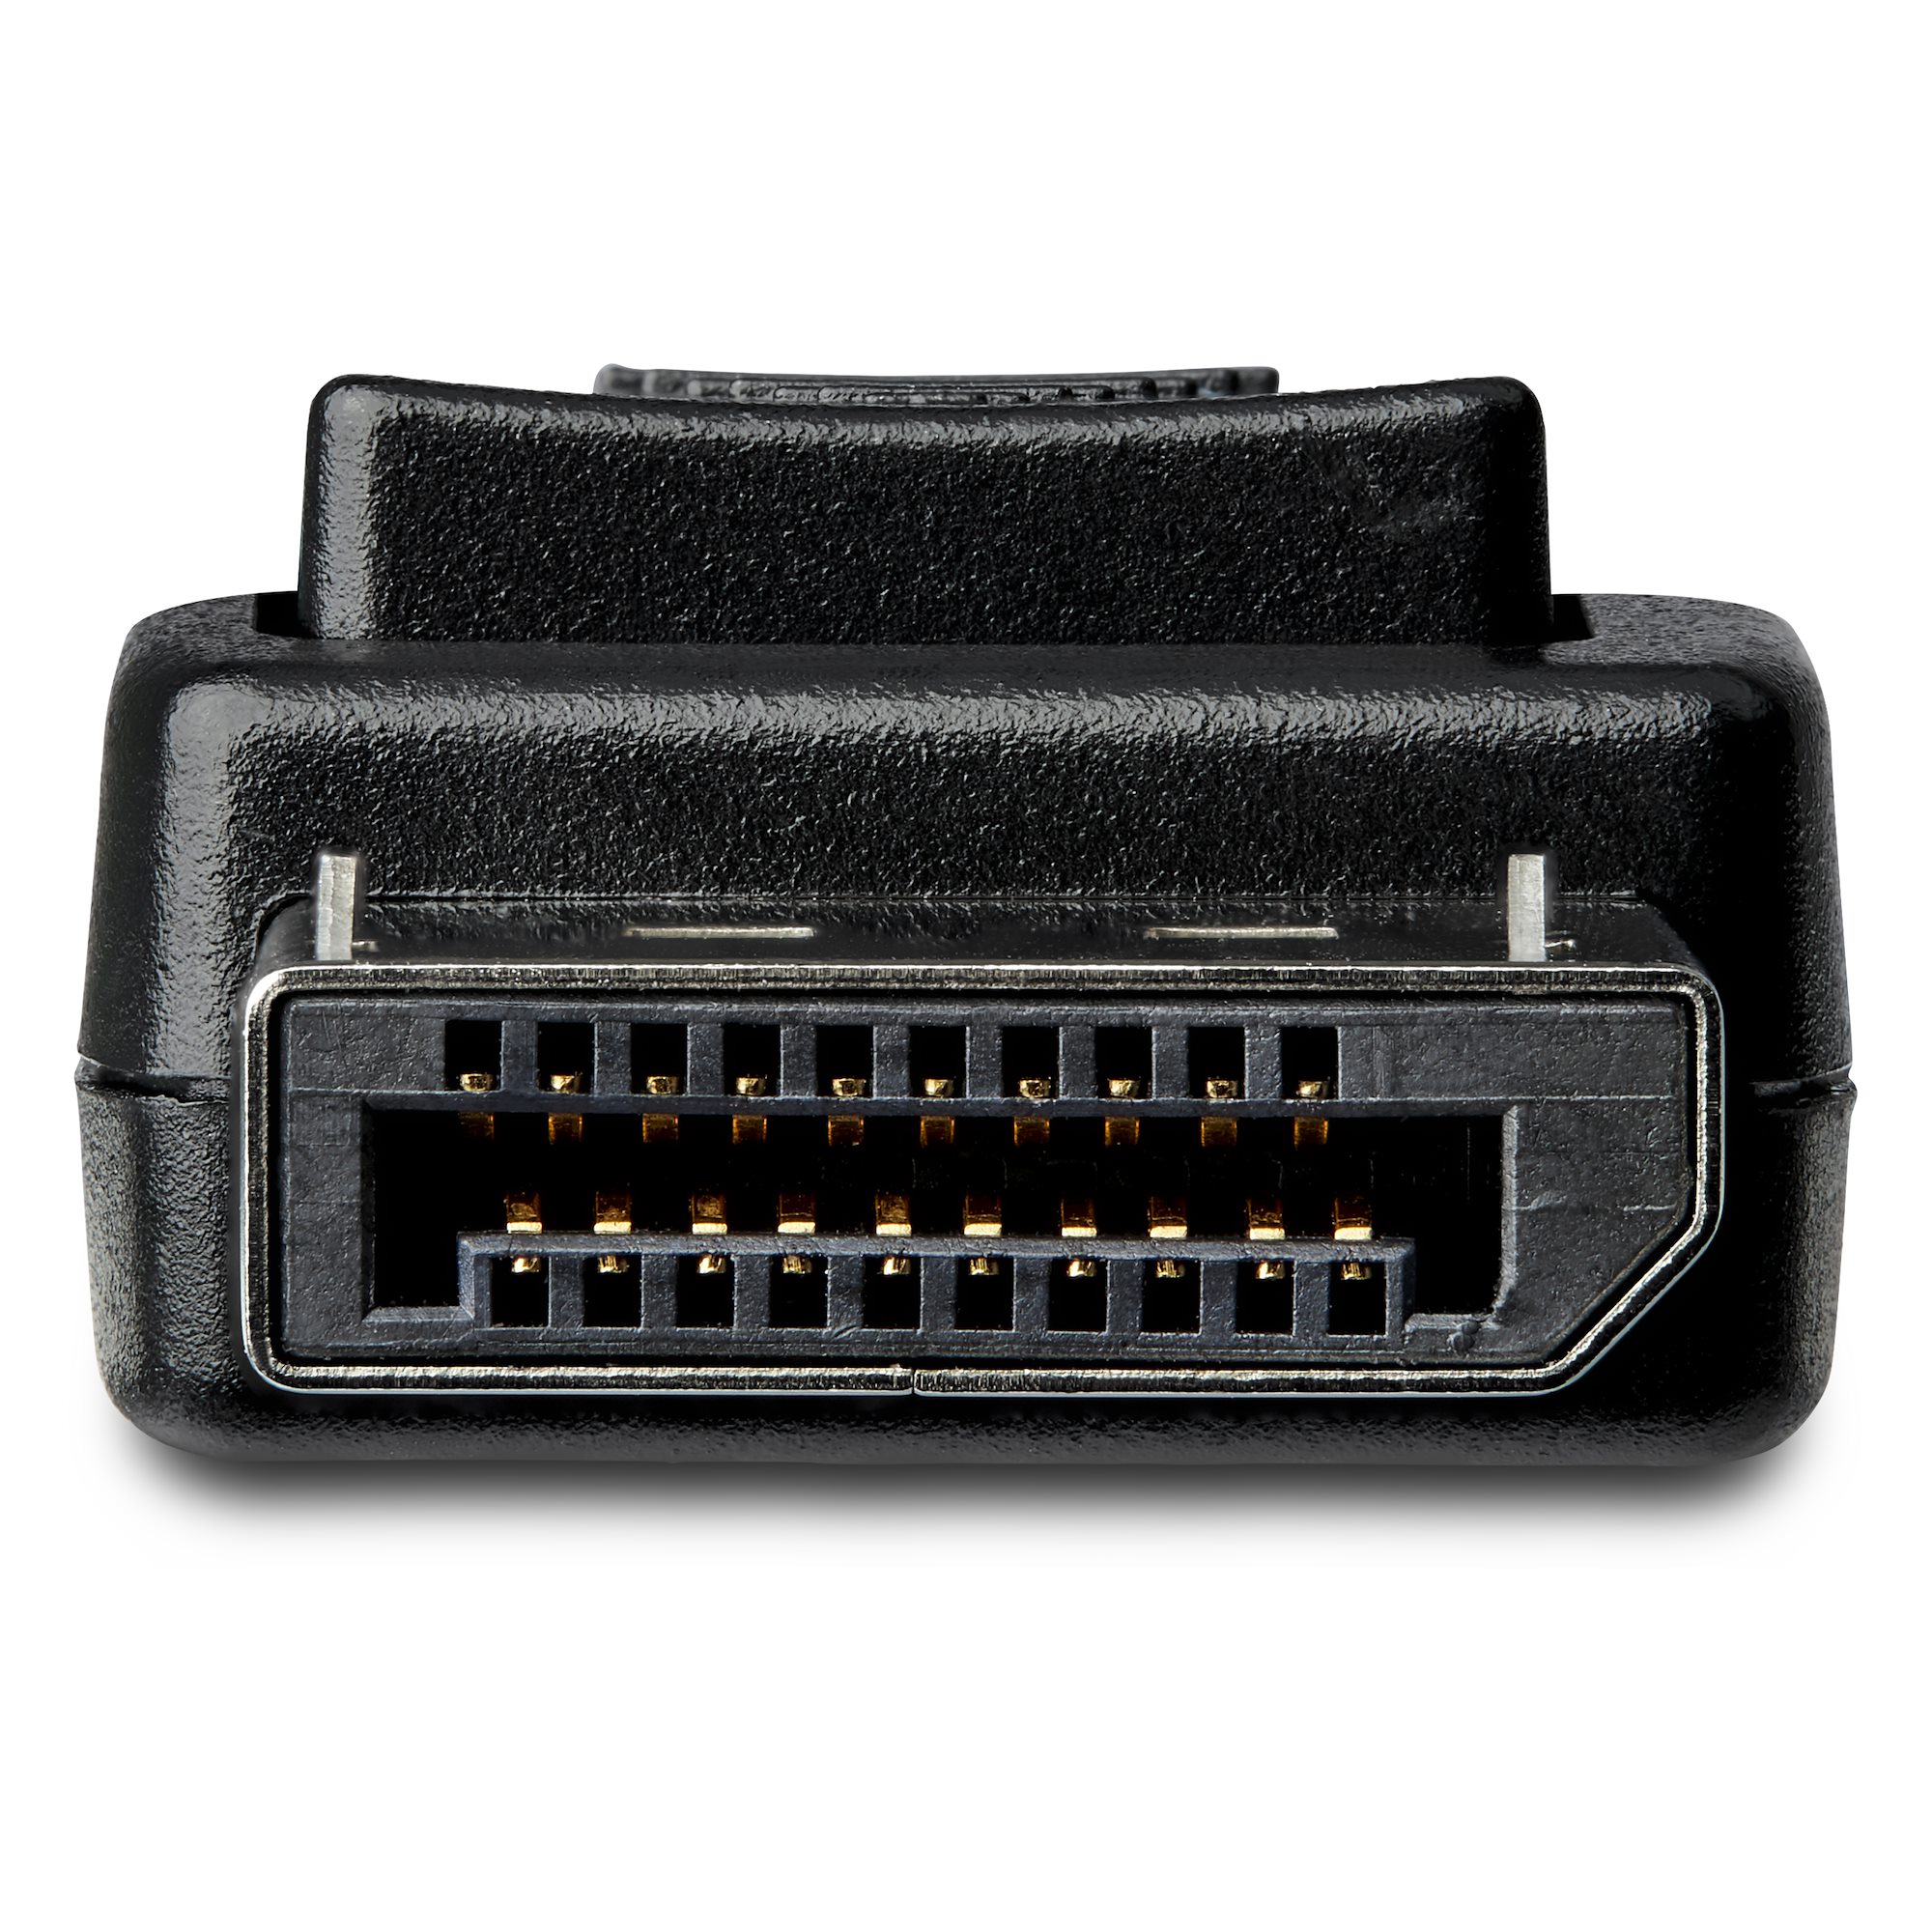 DisplayPort 1.2 to HDMI 2,0a 4k@60hz Active Cable - UPTab